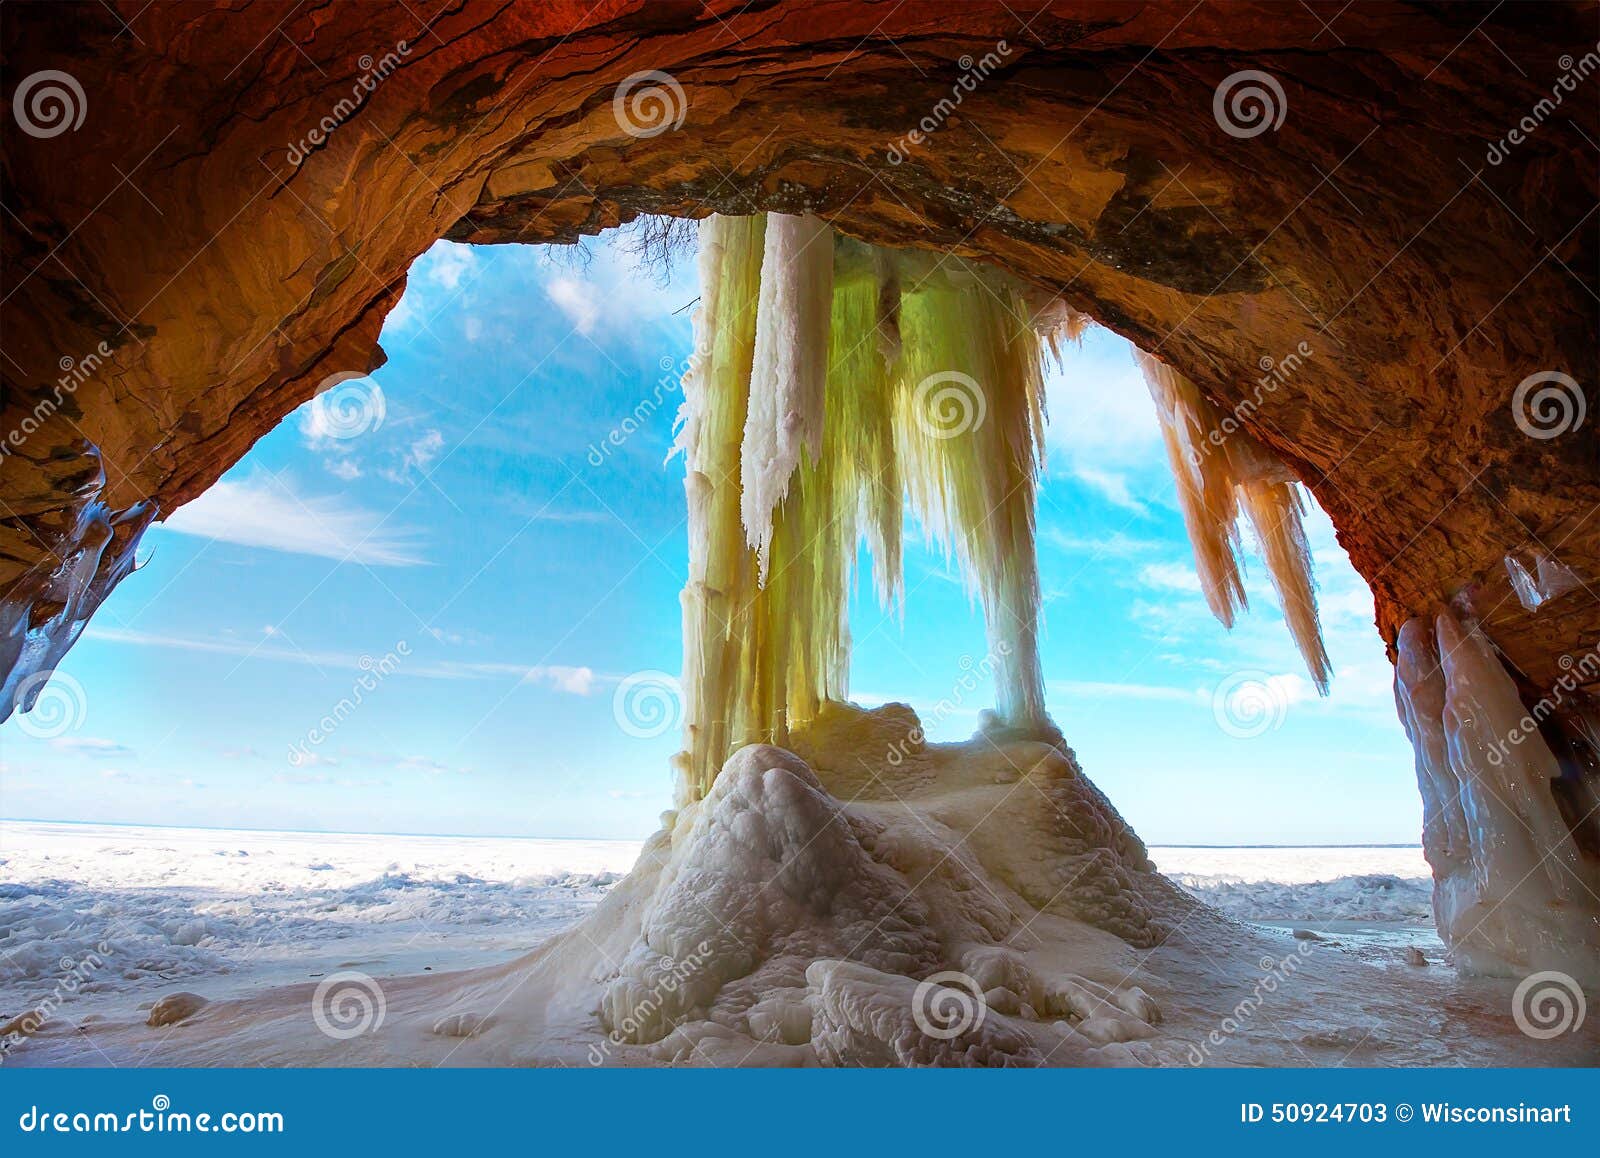 apostle islands ice caves wisconsin